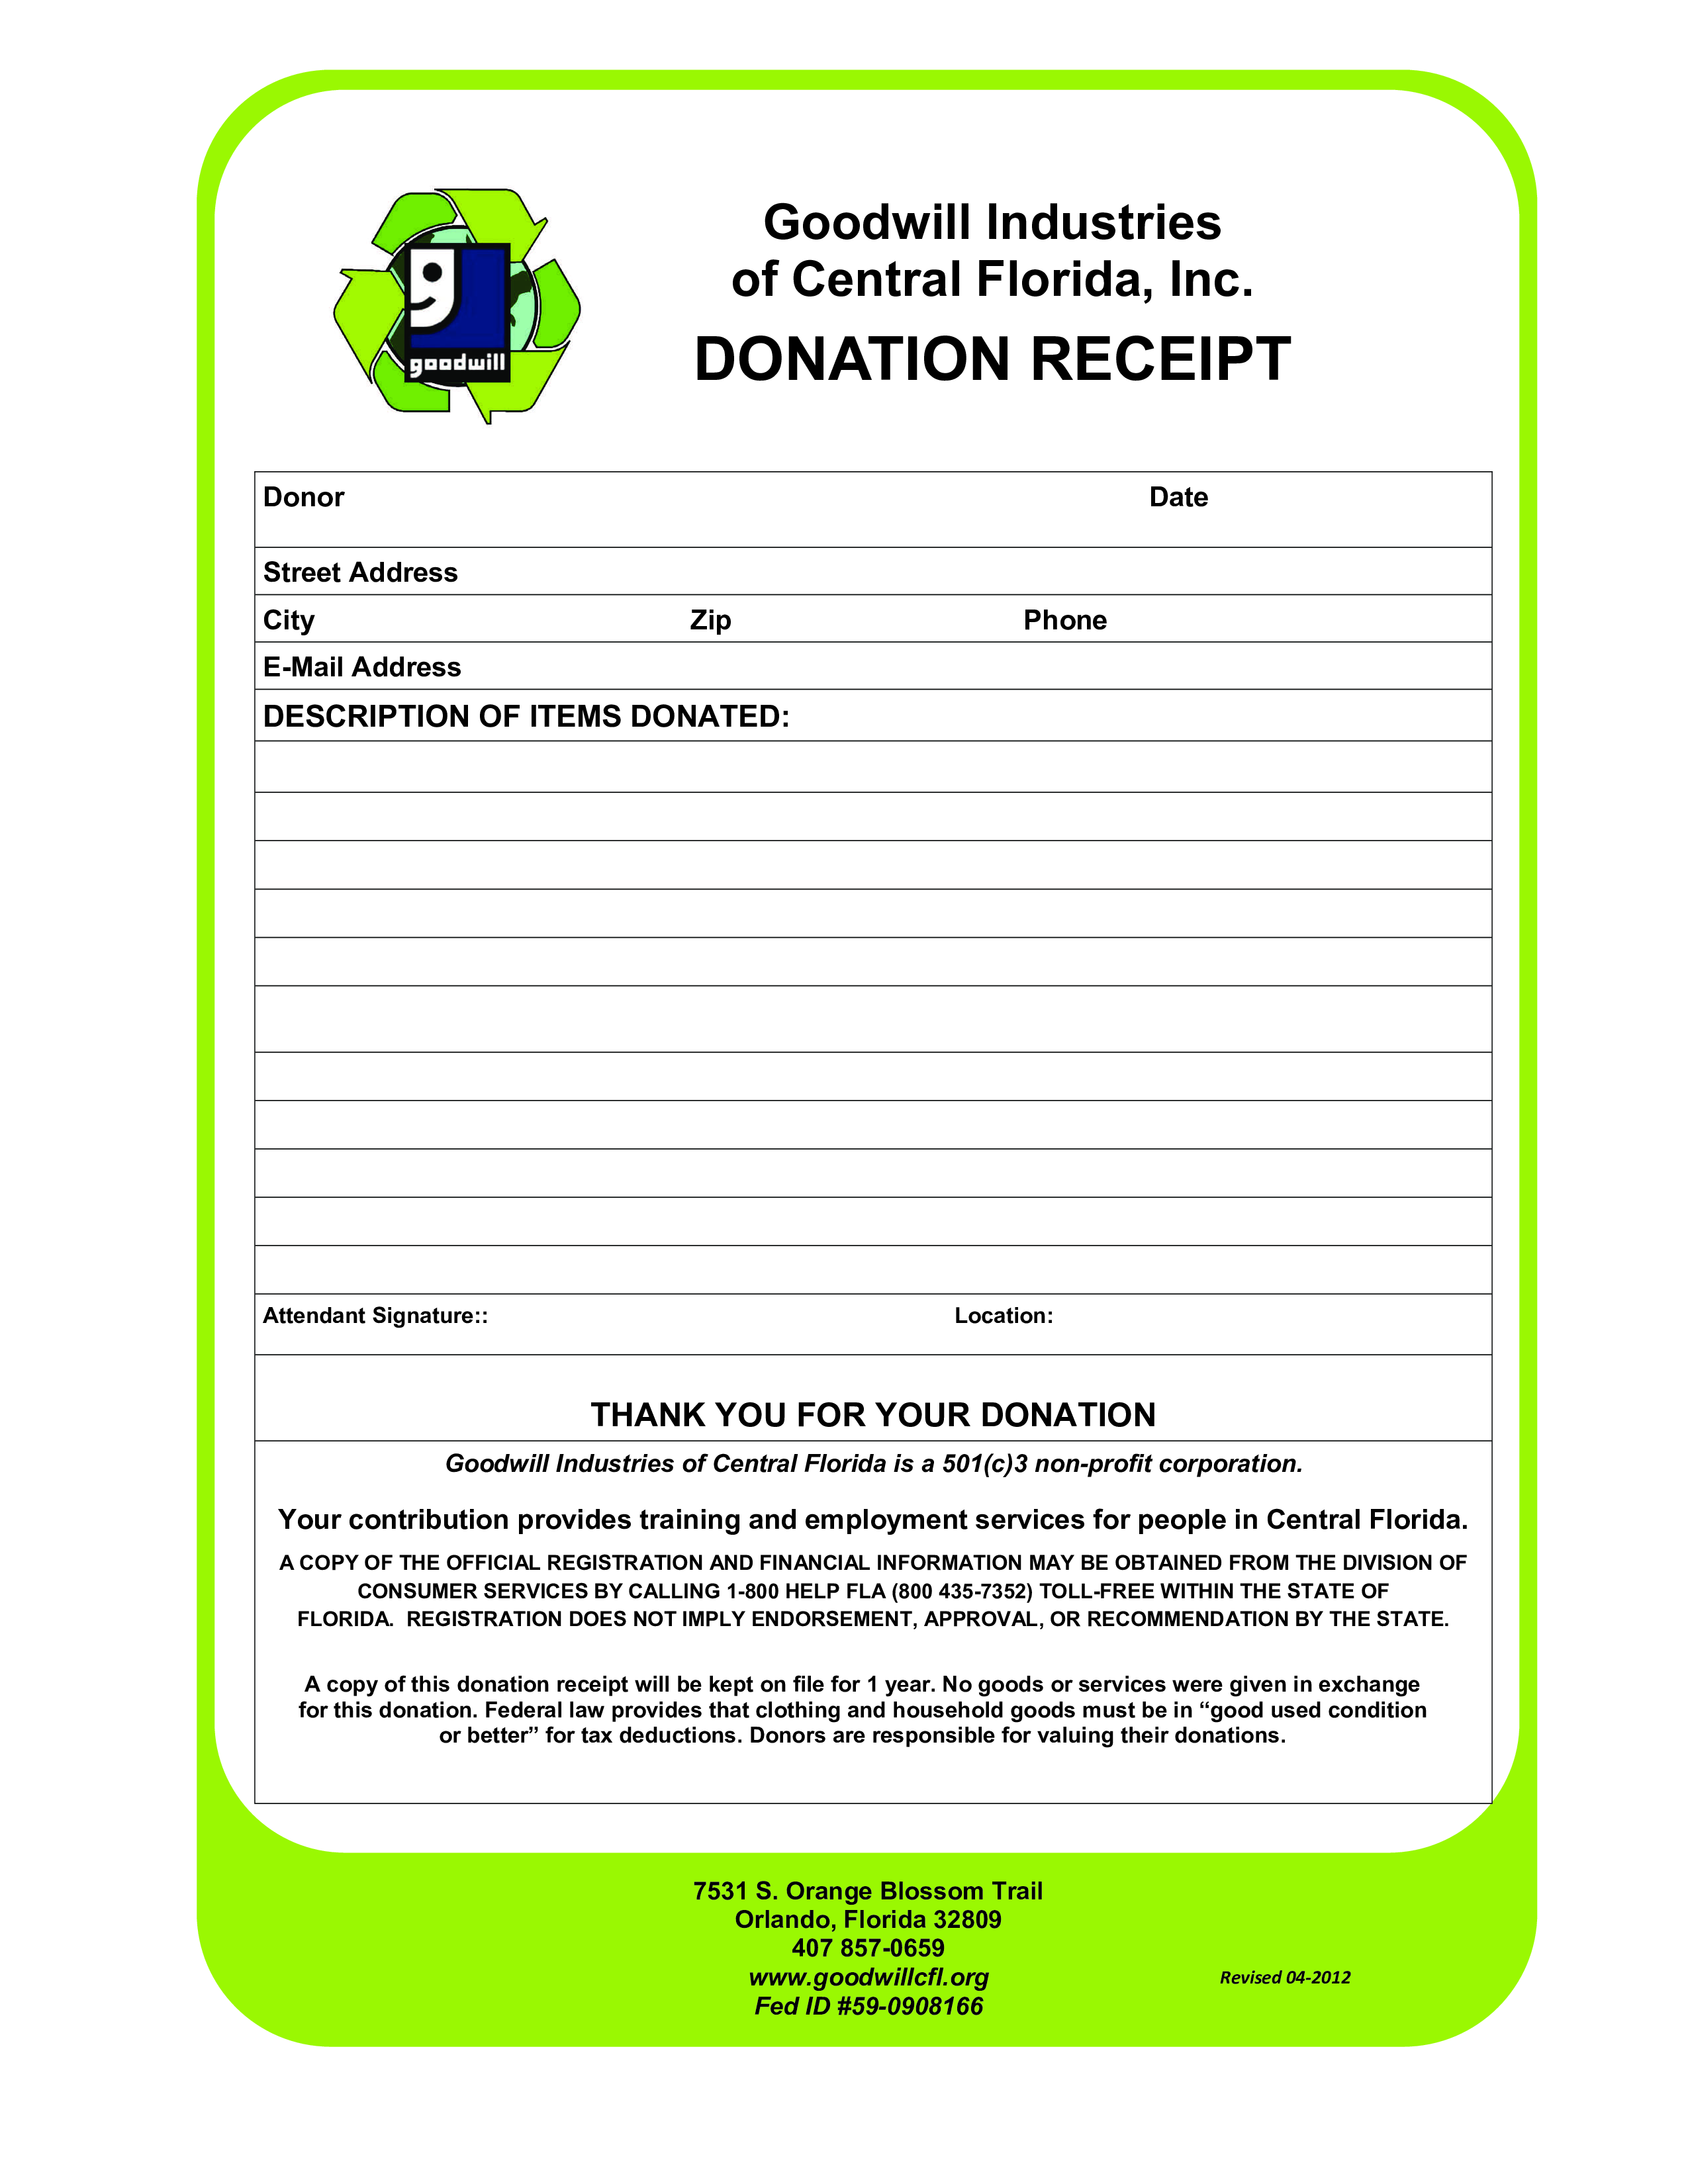 good will donation plantilla imagen principal